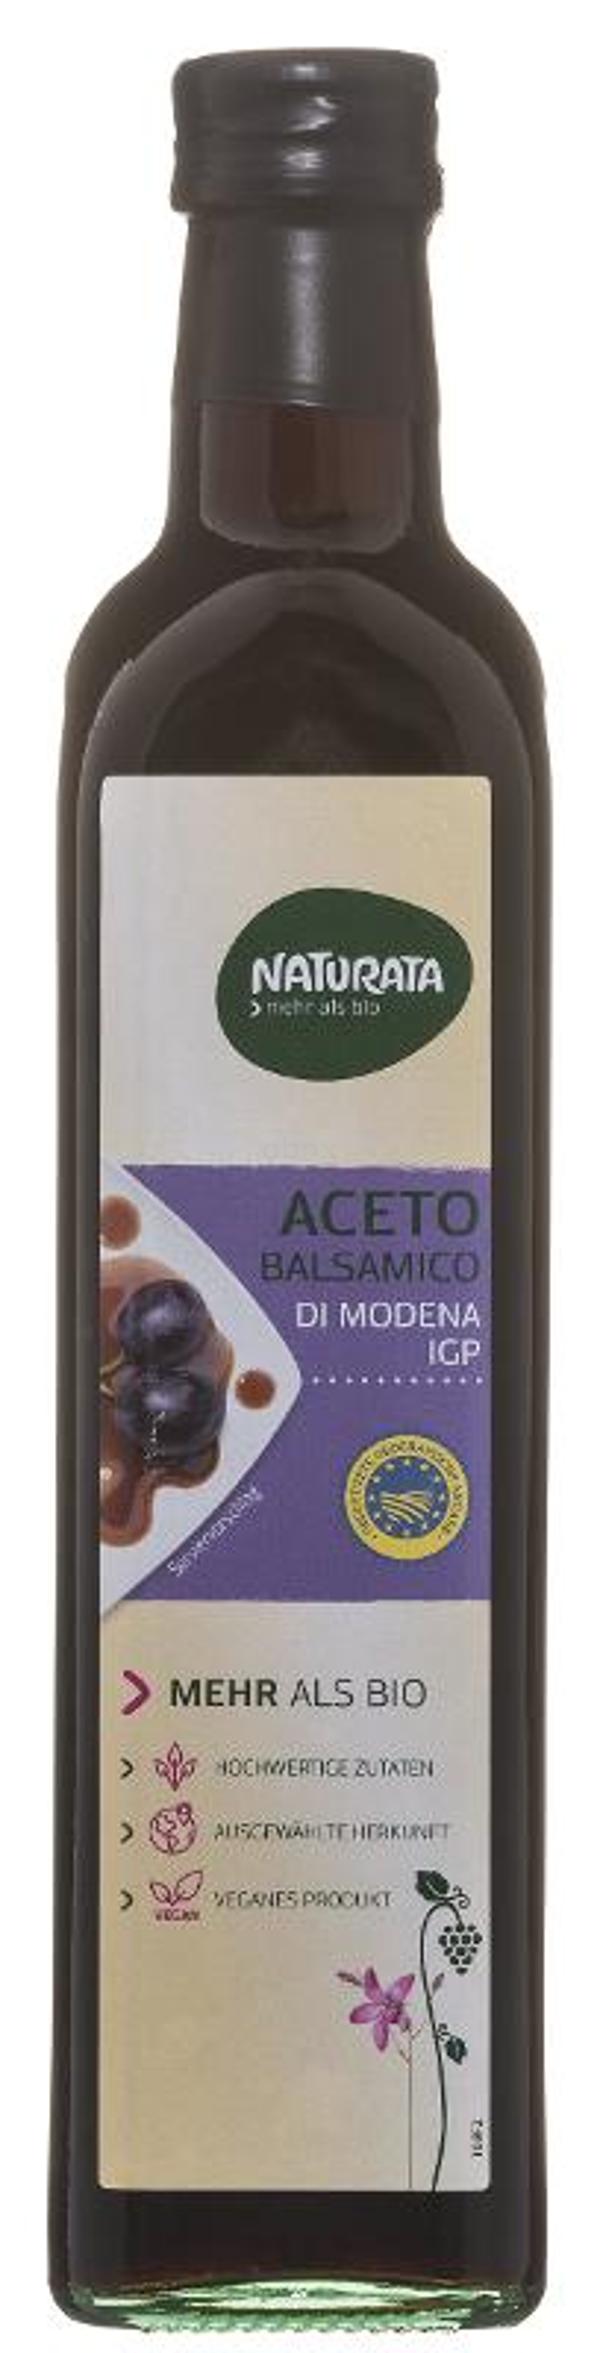 Produktfoto zu Aceto Balsamico di Modena